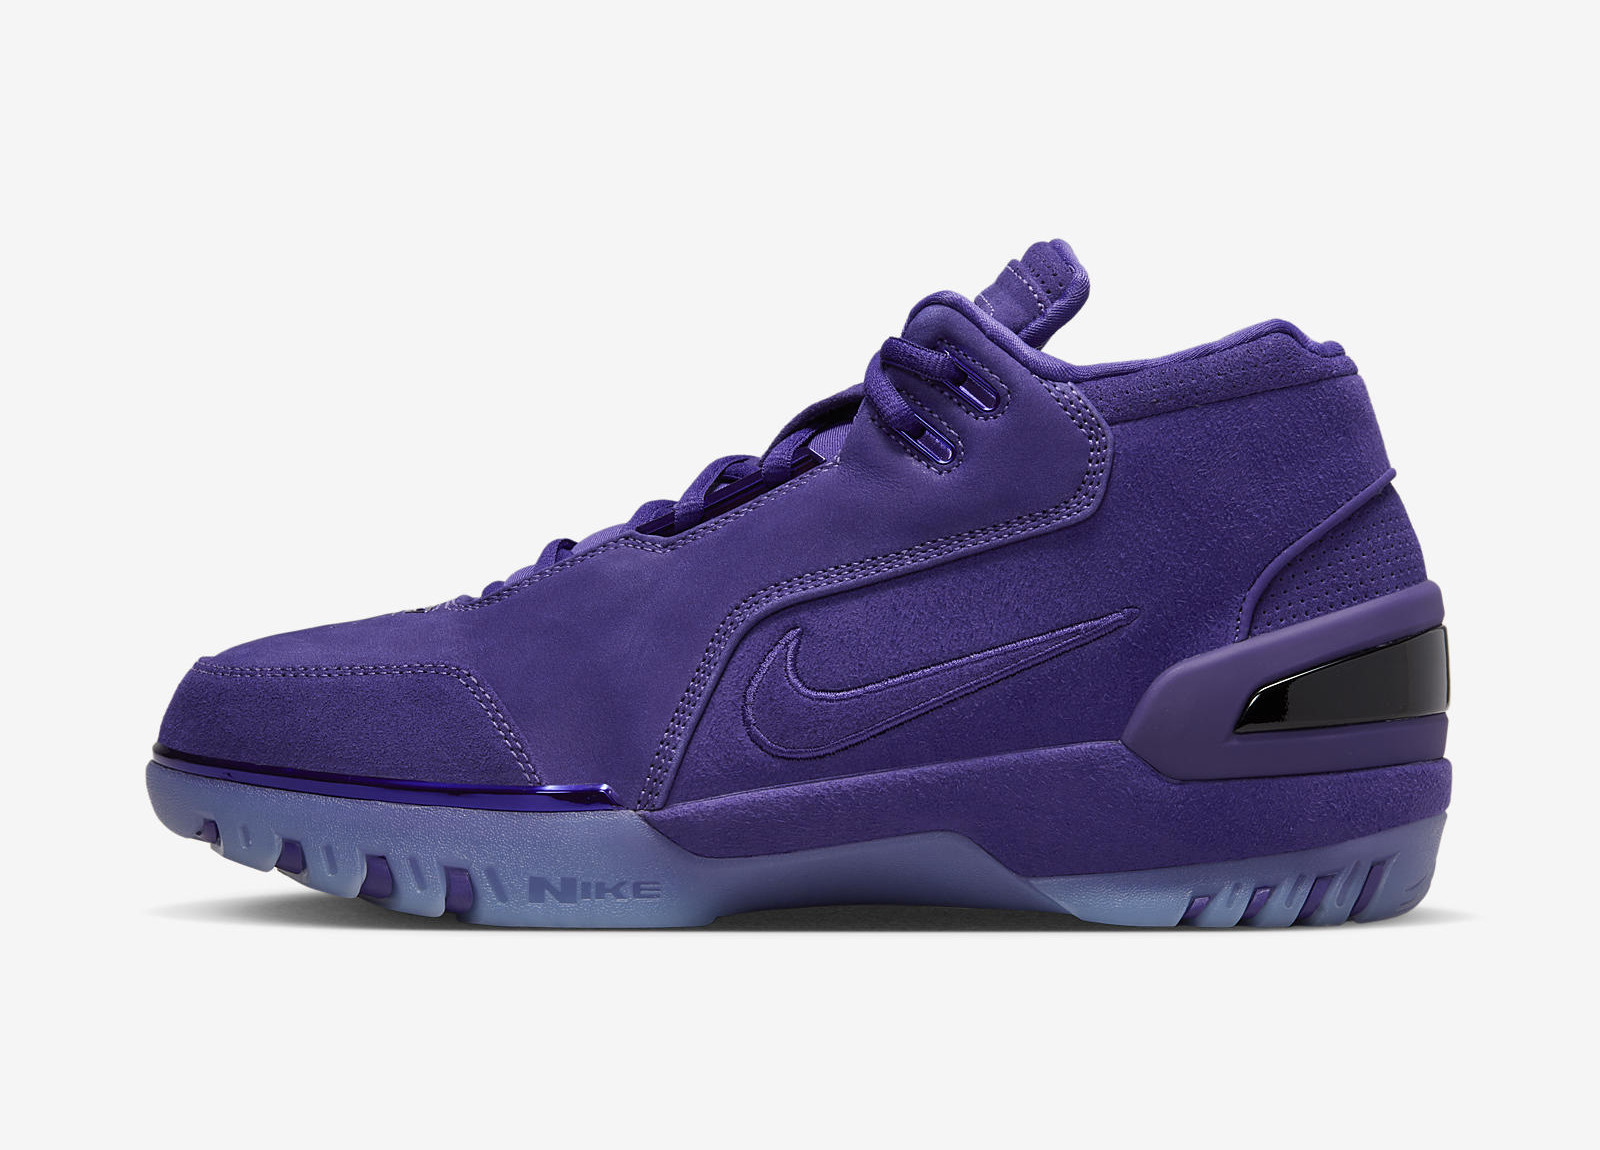 Nike Air Zoom Generation
« Court Purple »